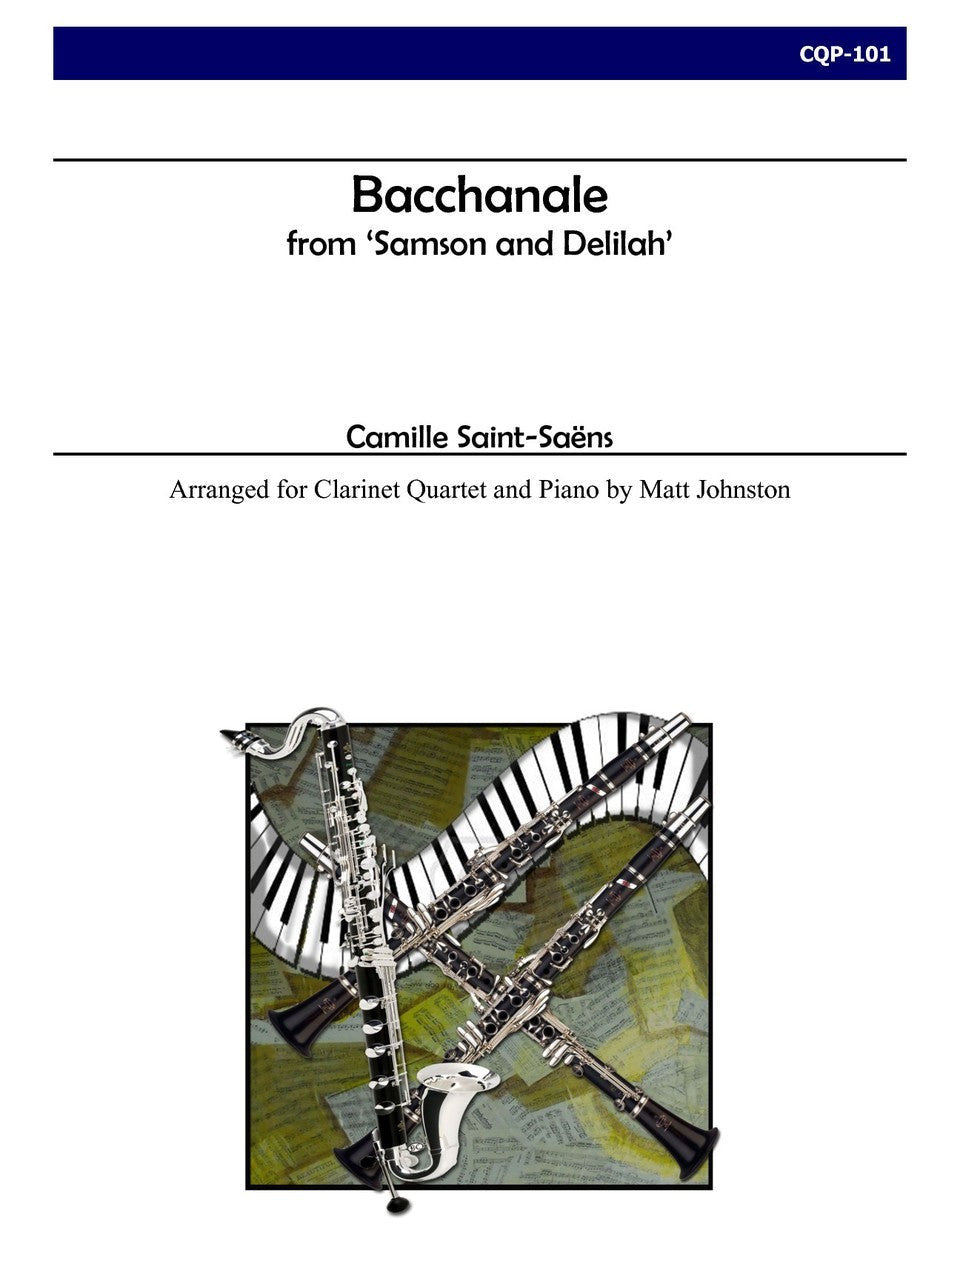 Saint-Saëns (arr. Matt Johnston) - Bacchanale from "Samson and Delilah" for Clarinet Quartet and Piano